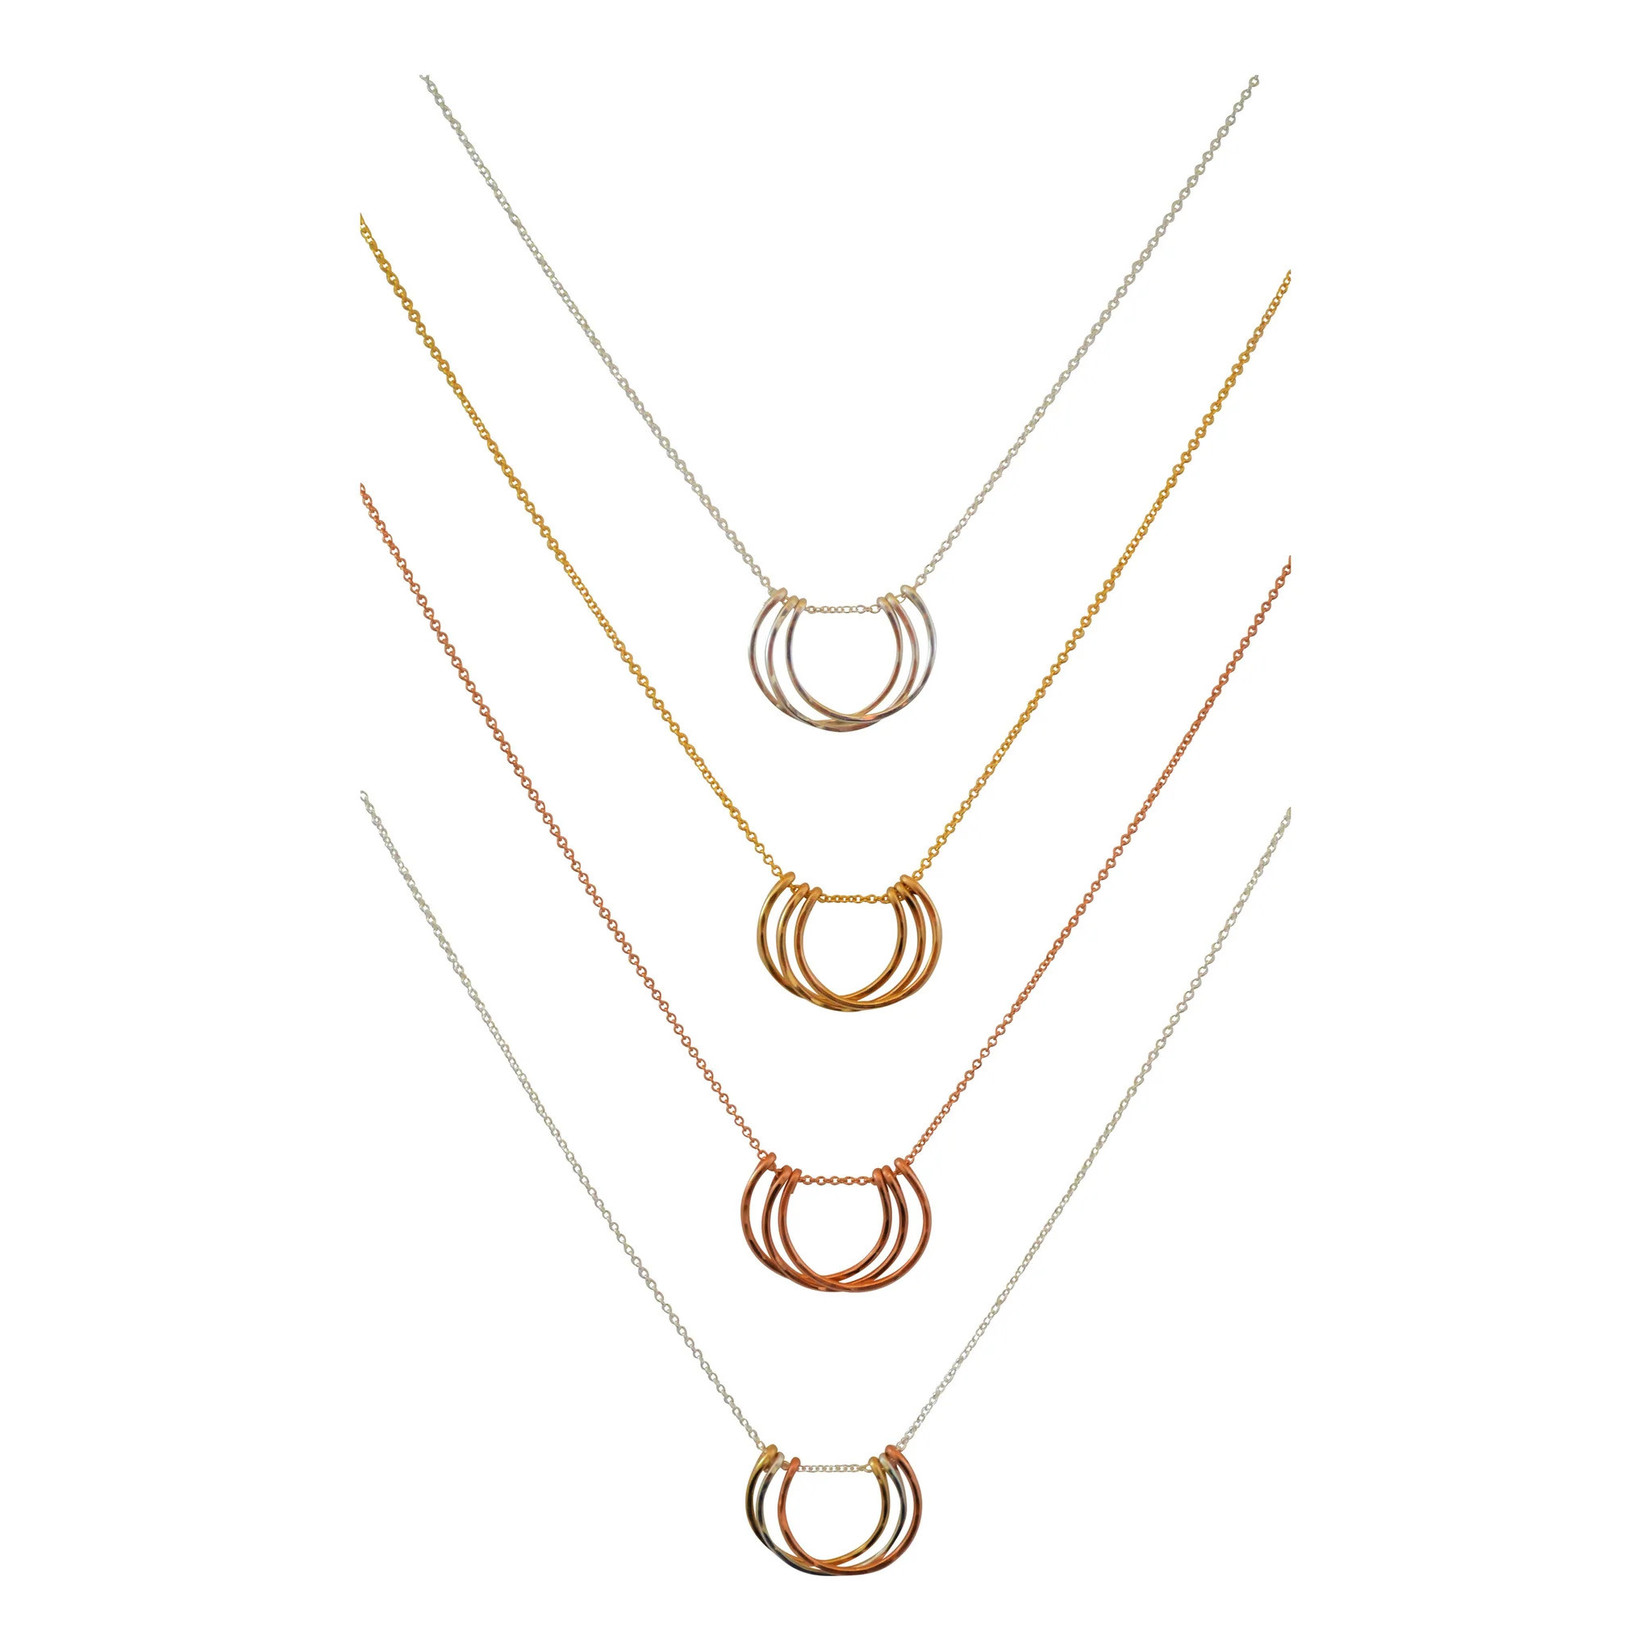 Tamacino Palm - Interlocking Half Circles Necklace - 17" chain